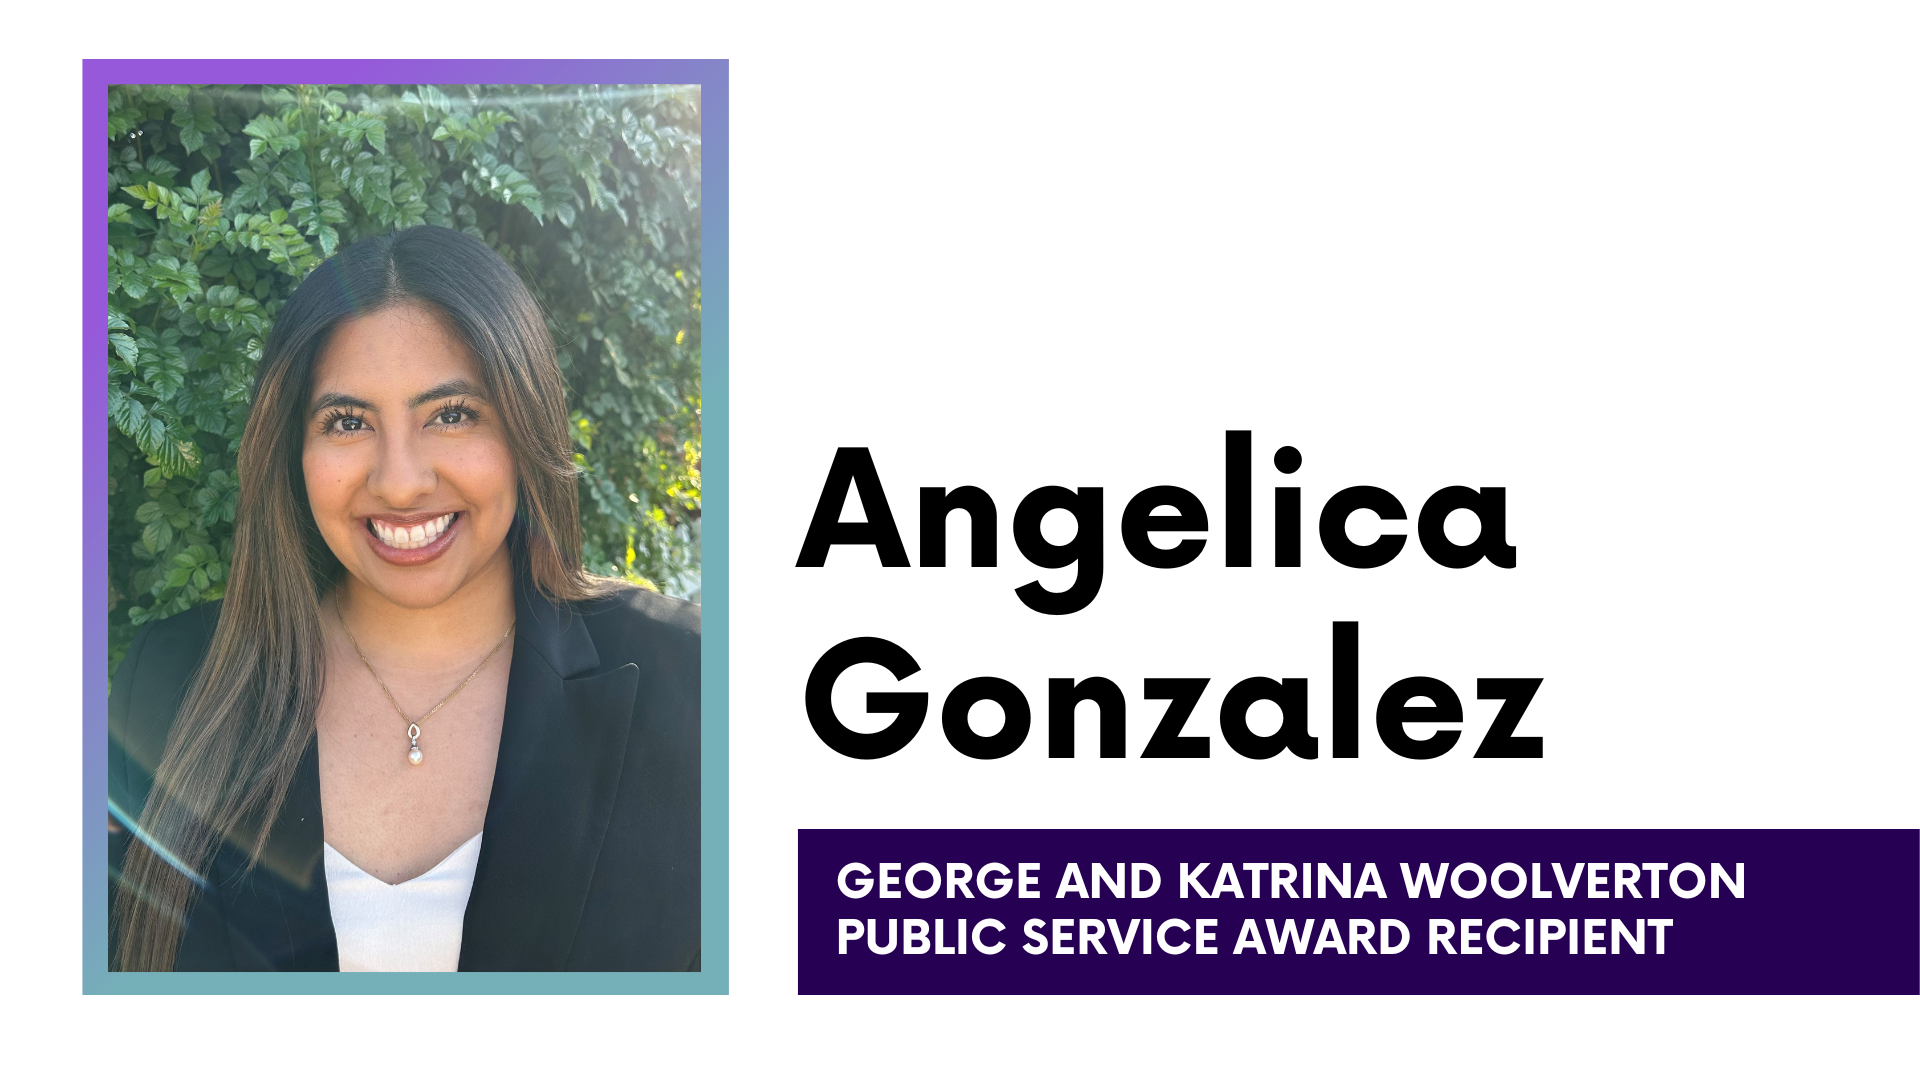 Angelica Gonzalez - George and Katrina Woolverton Public Service Award Recipient